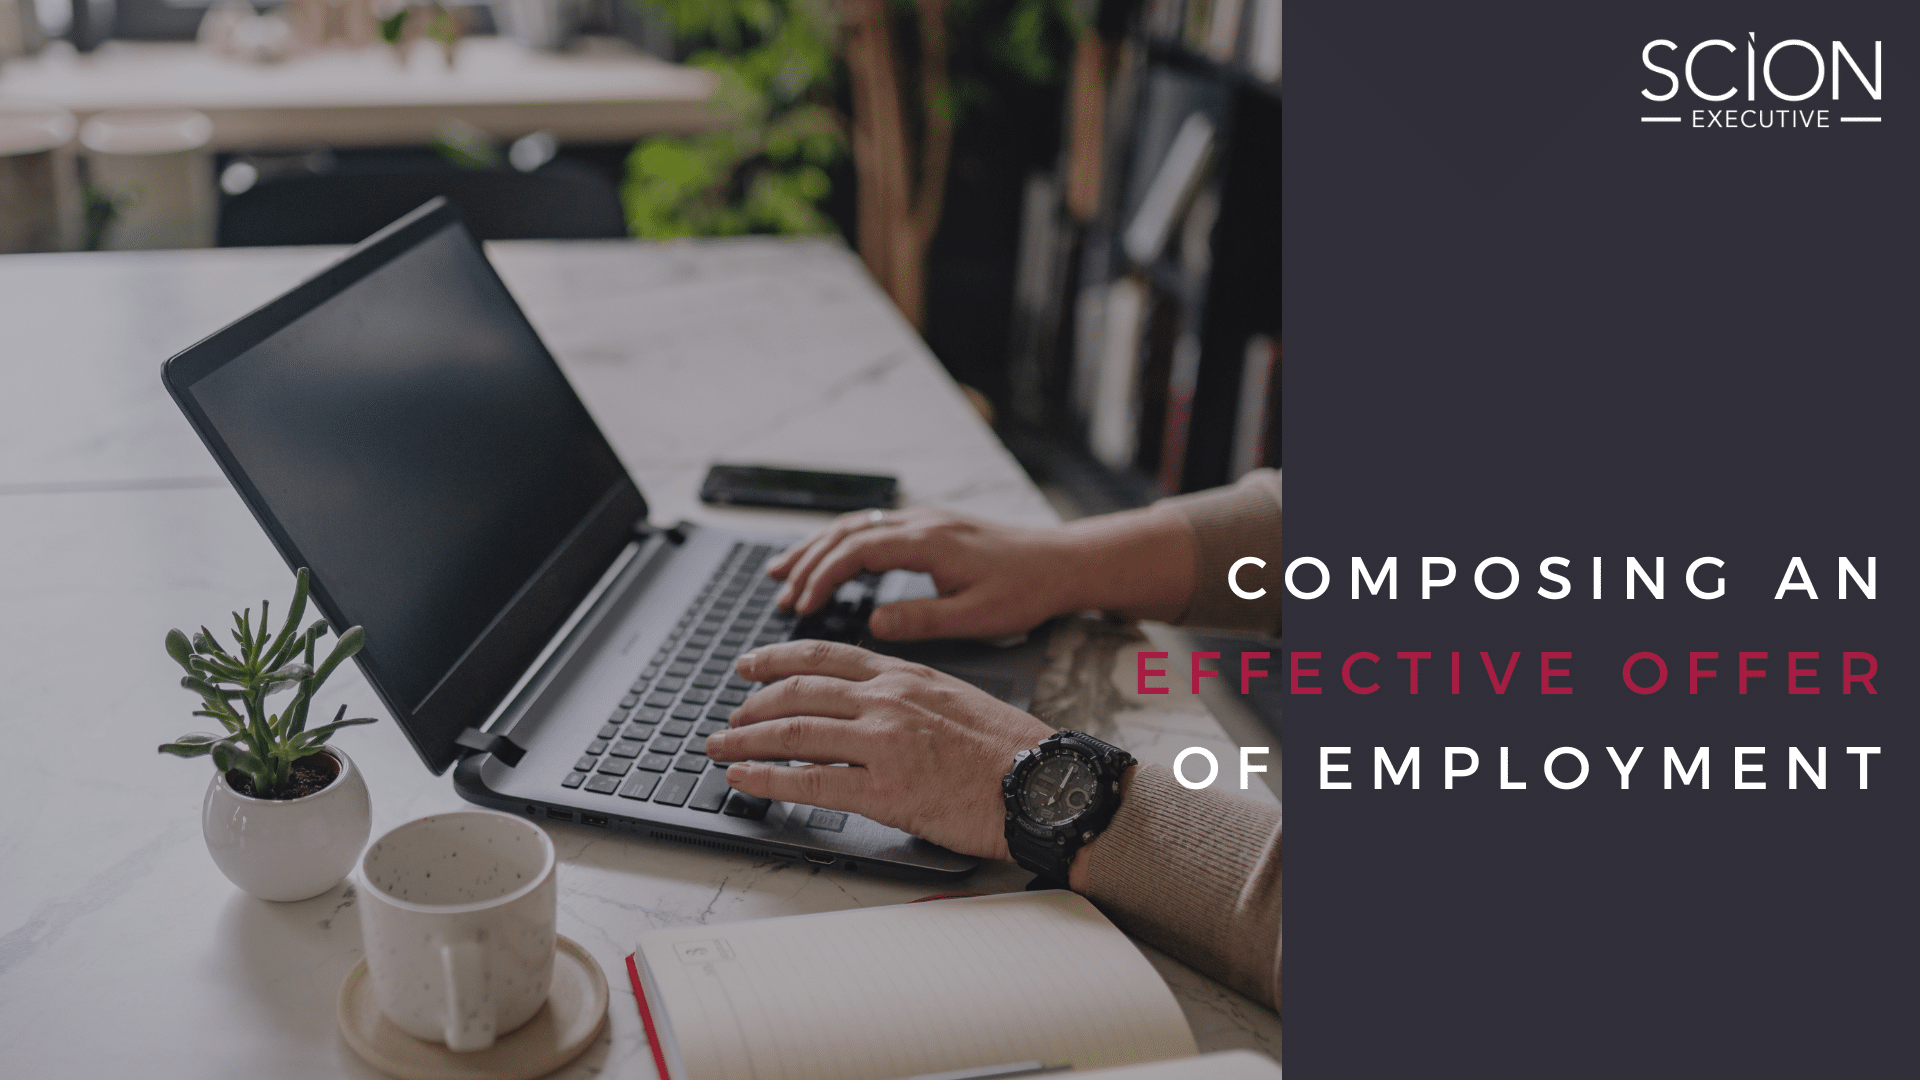 Composing an Effective Offer of Employment